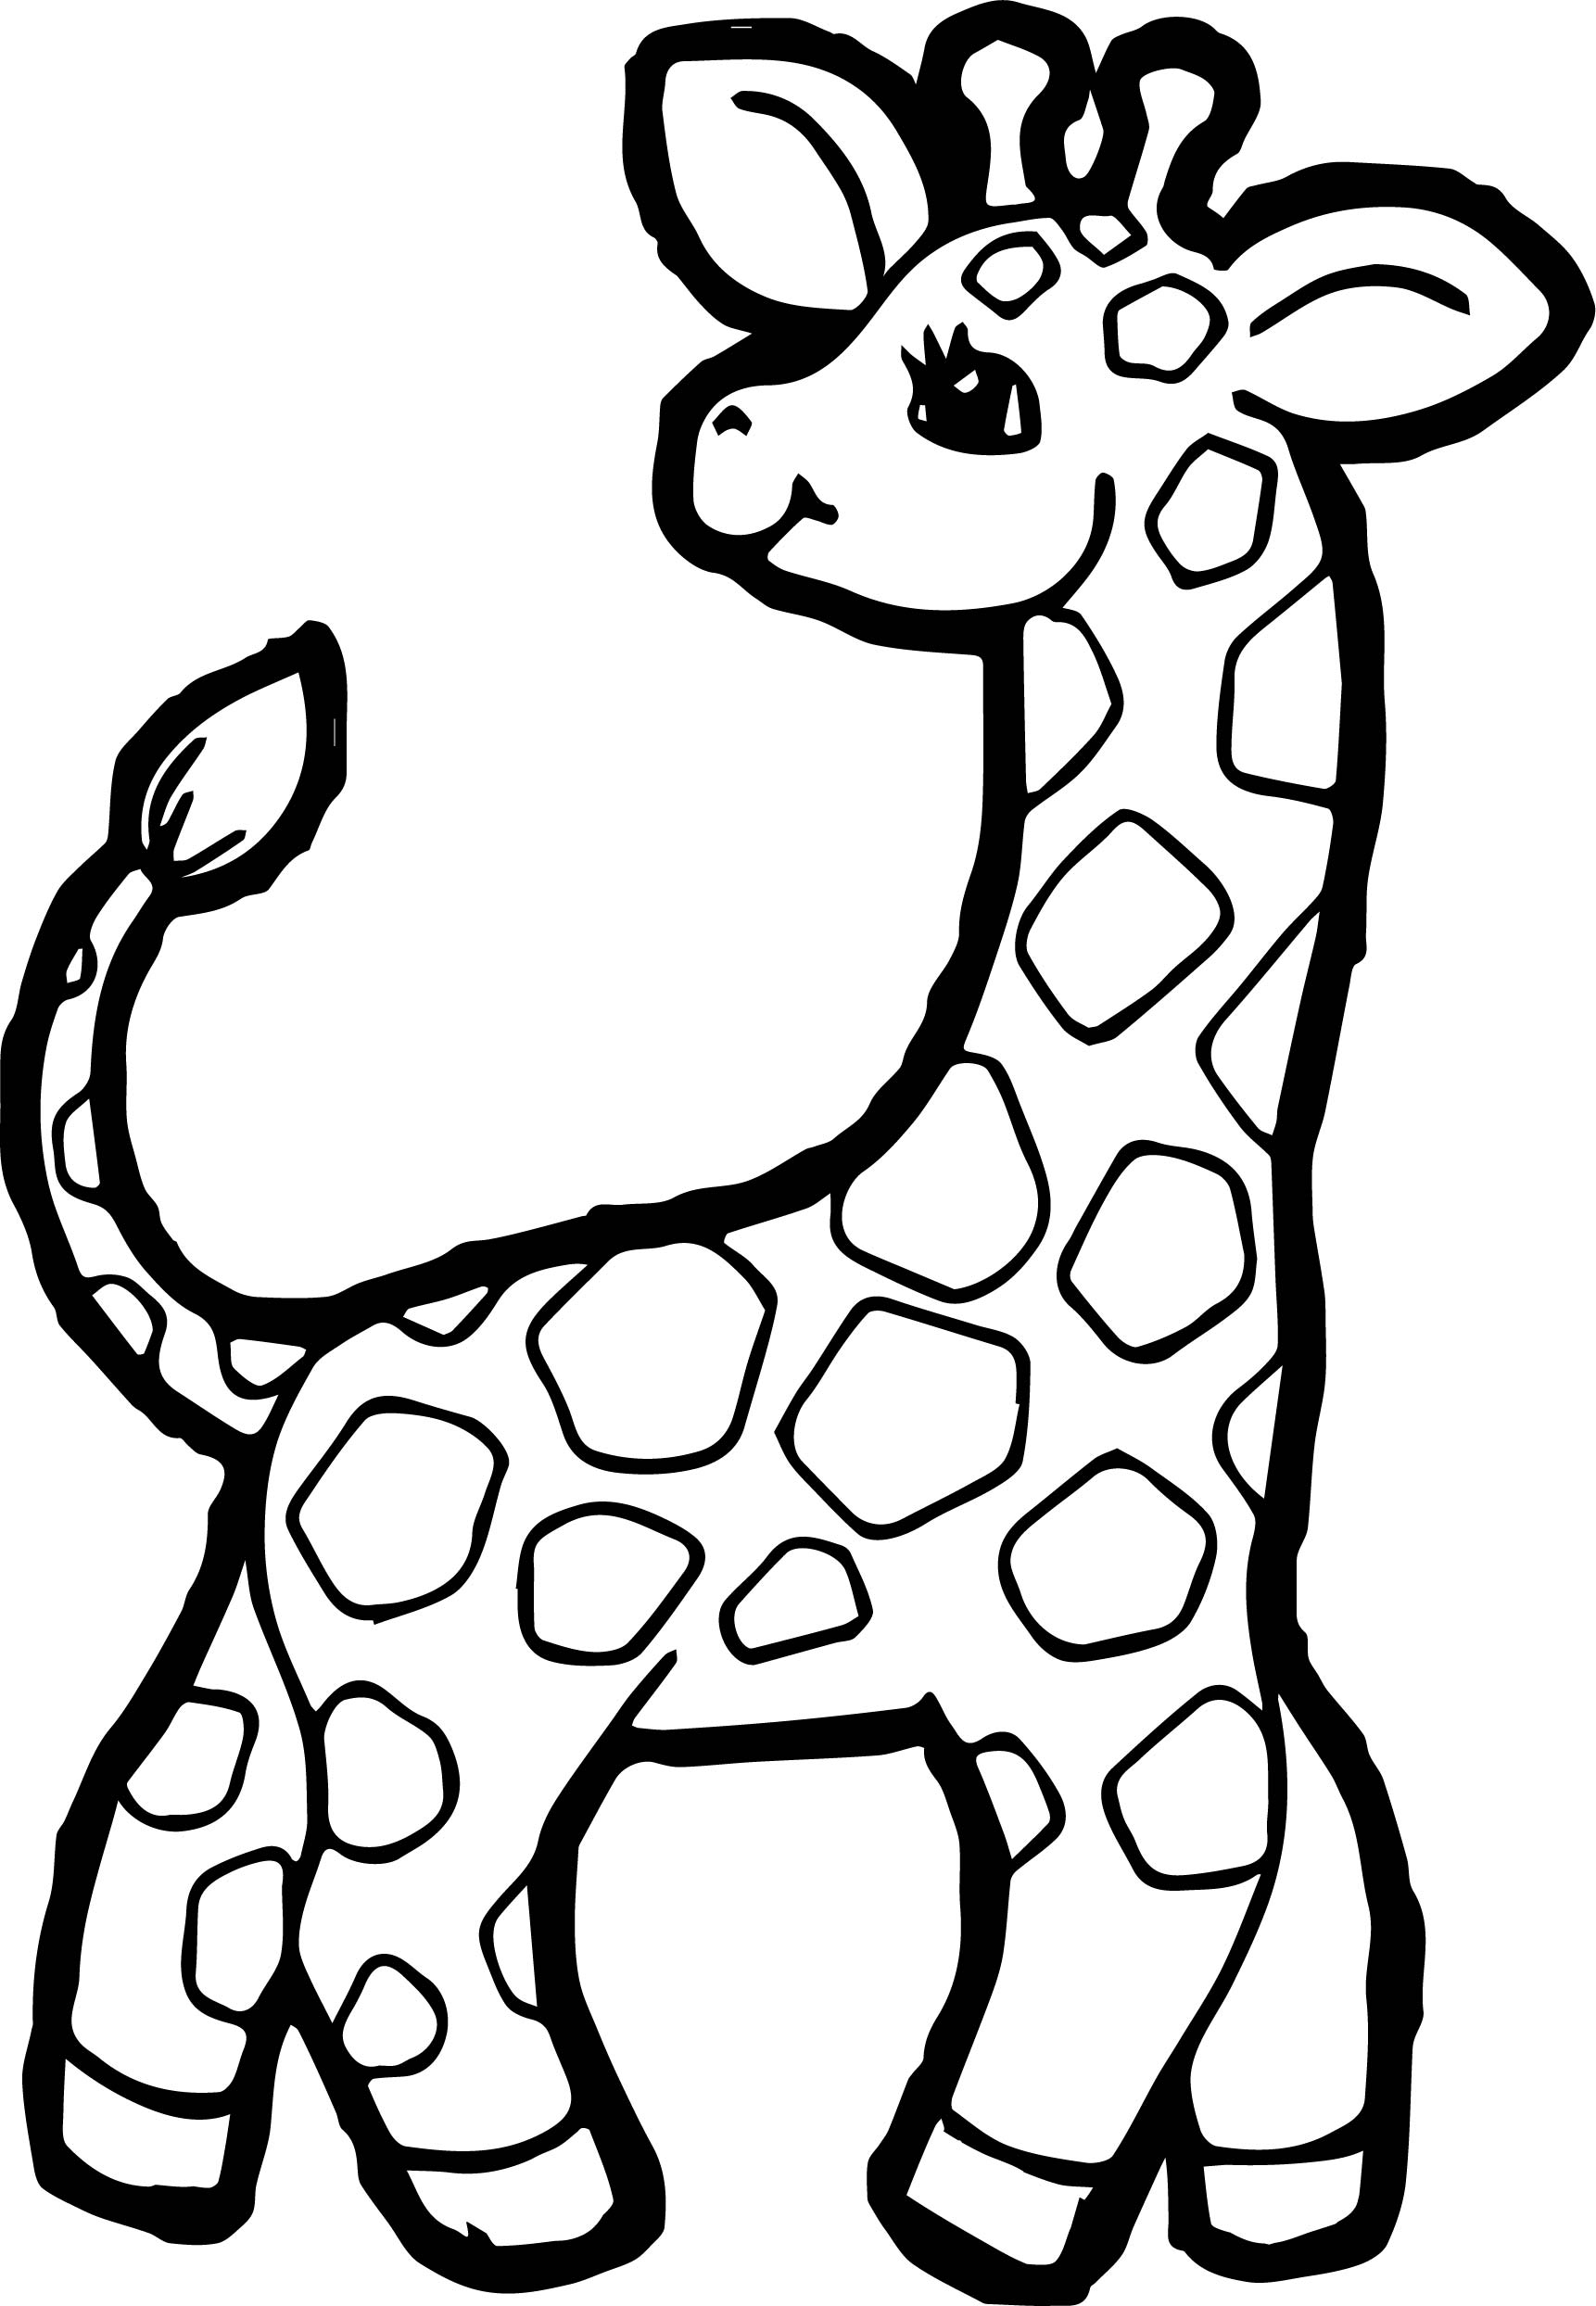 Download Giraffe clipart coloring, Giraffe coloring Transparent ...